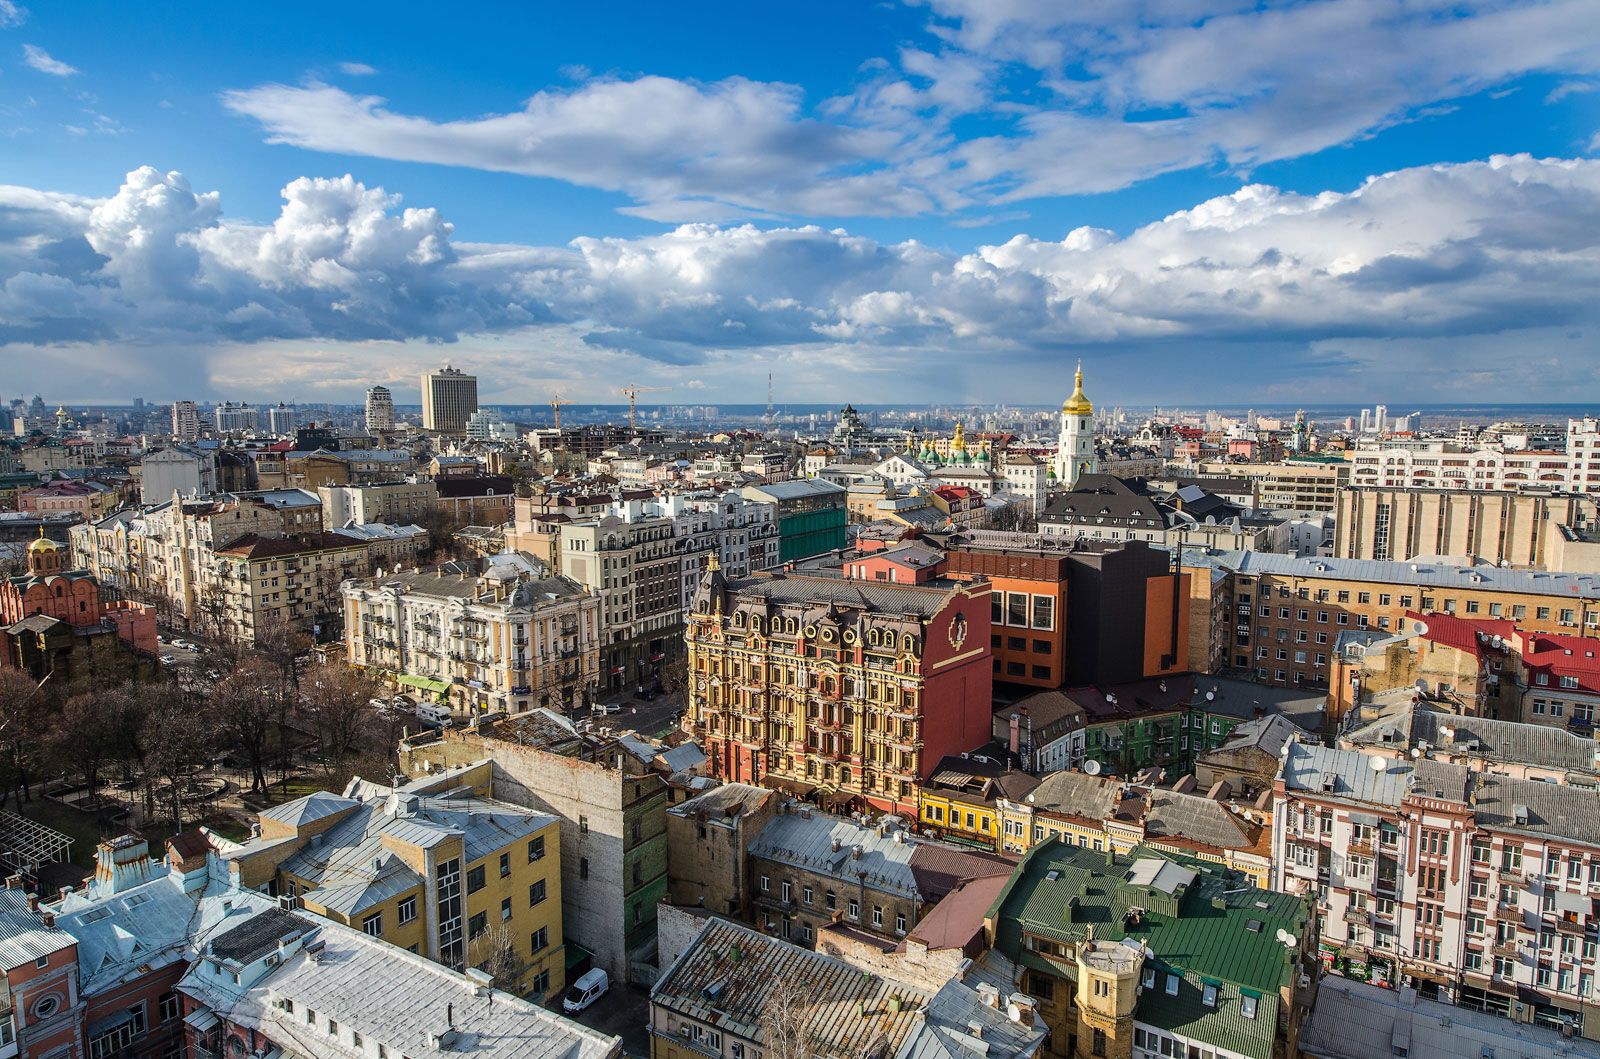 bernard masterson recommends pictures of kiev, ukraine pic